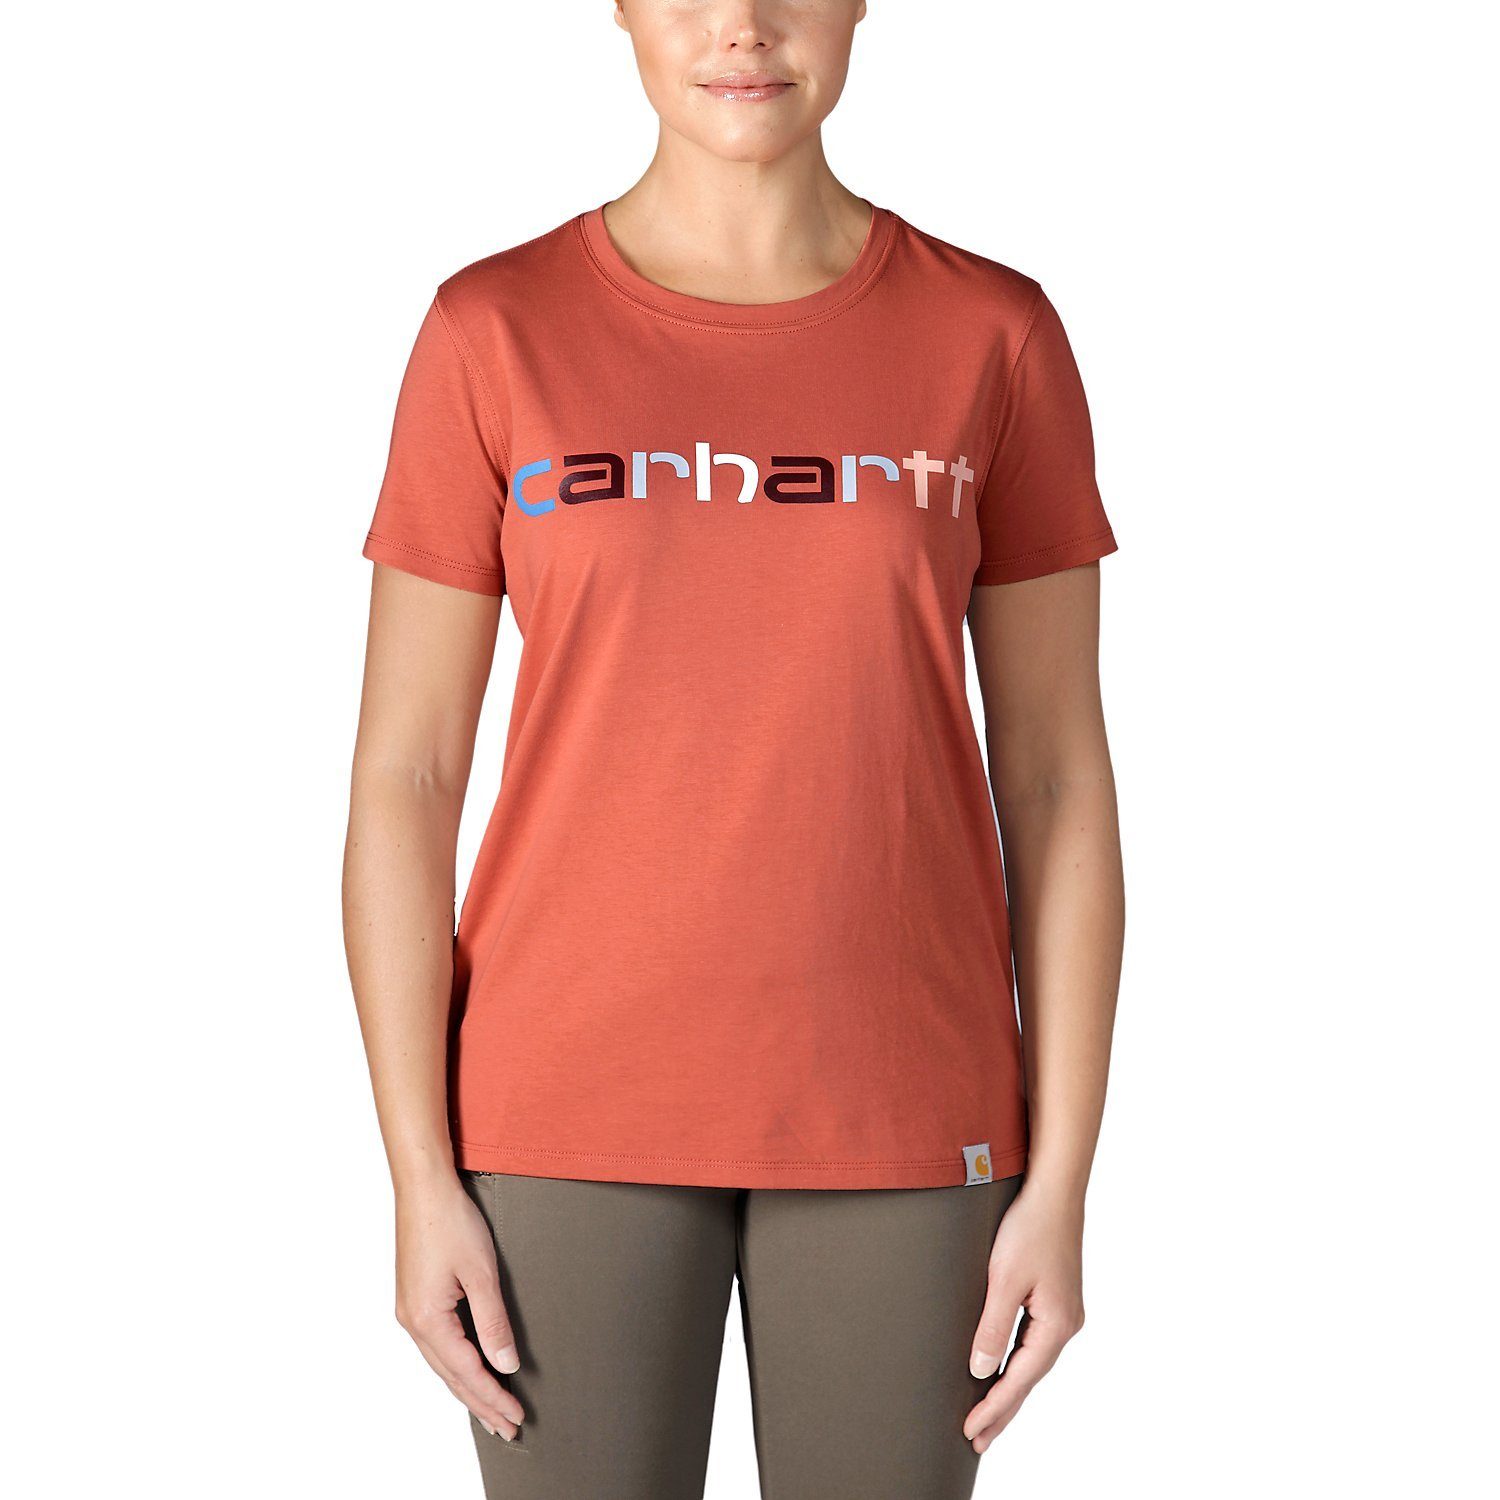 T-Shirt Carhartt Multi Color Damen Graphic Terracot Logo